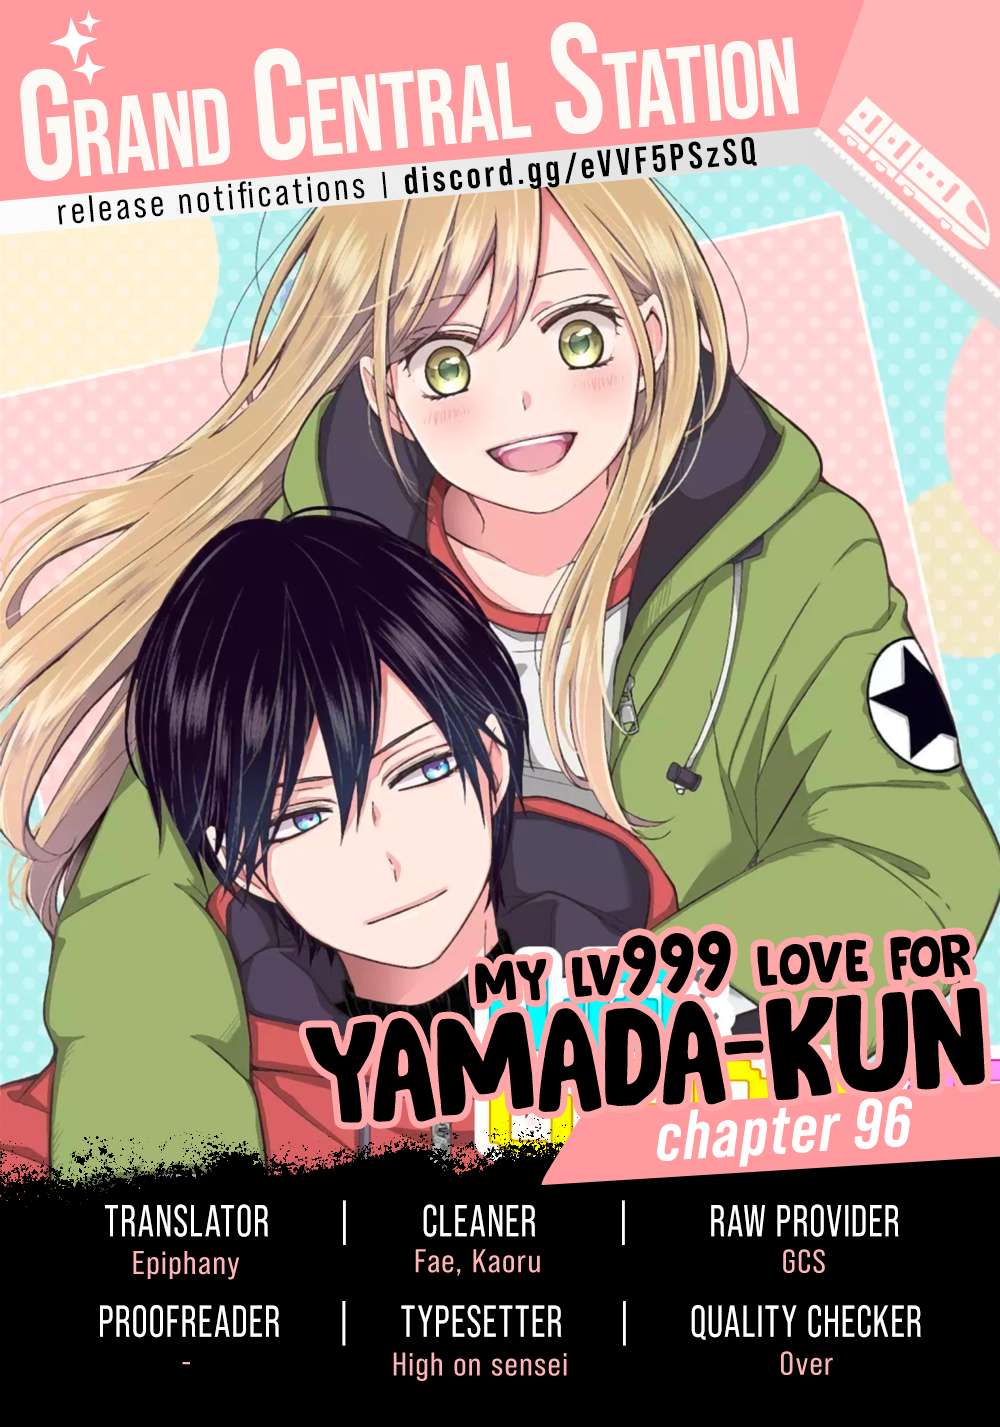 My Love Story with Yamada Kun at lvl 999 anime announced!! : r/manganews